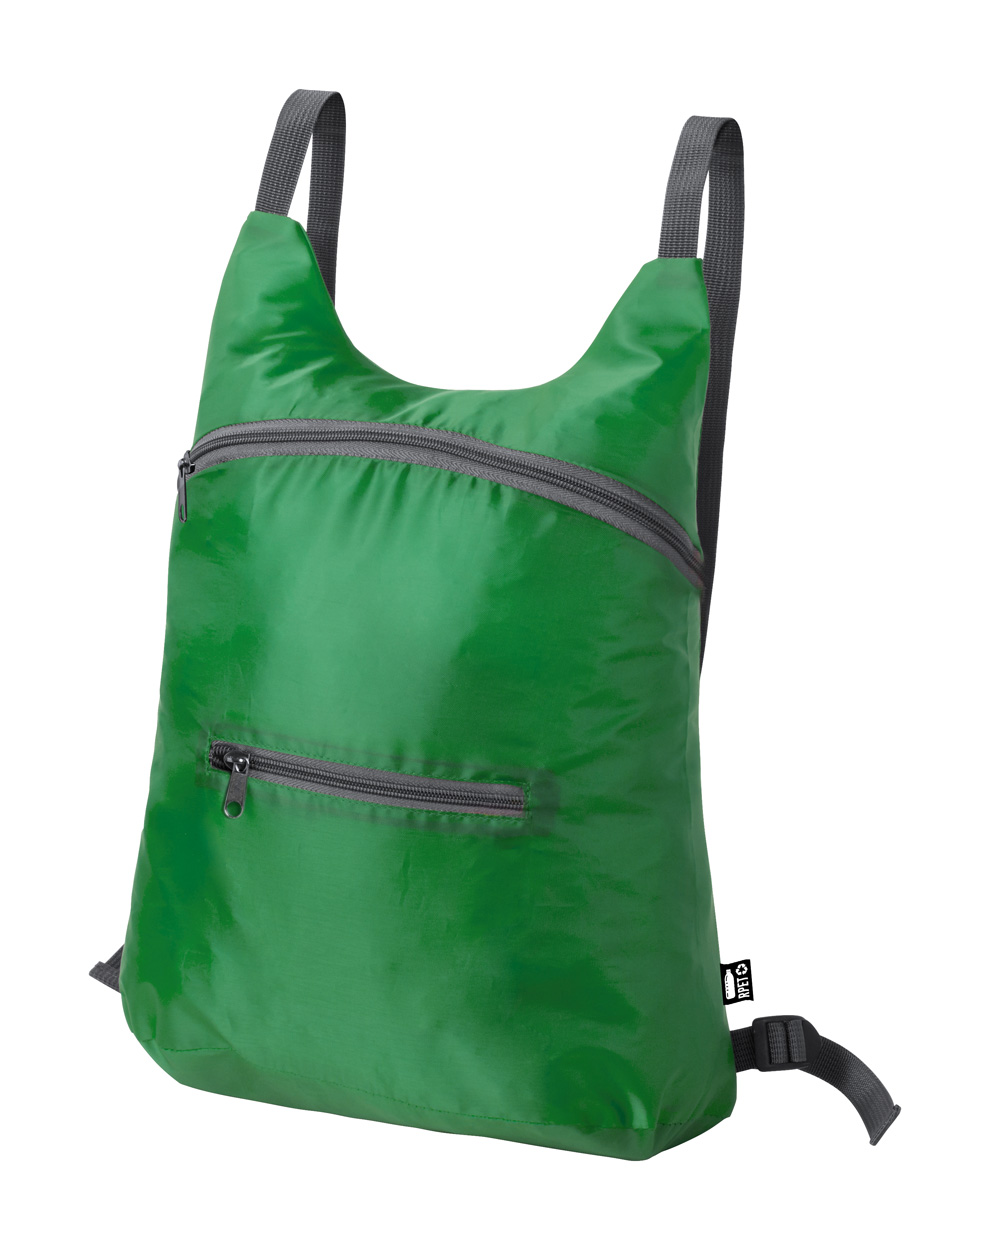 Brocky folding RPET backpack - green